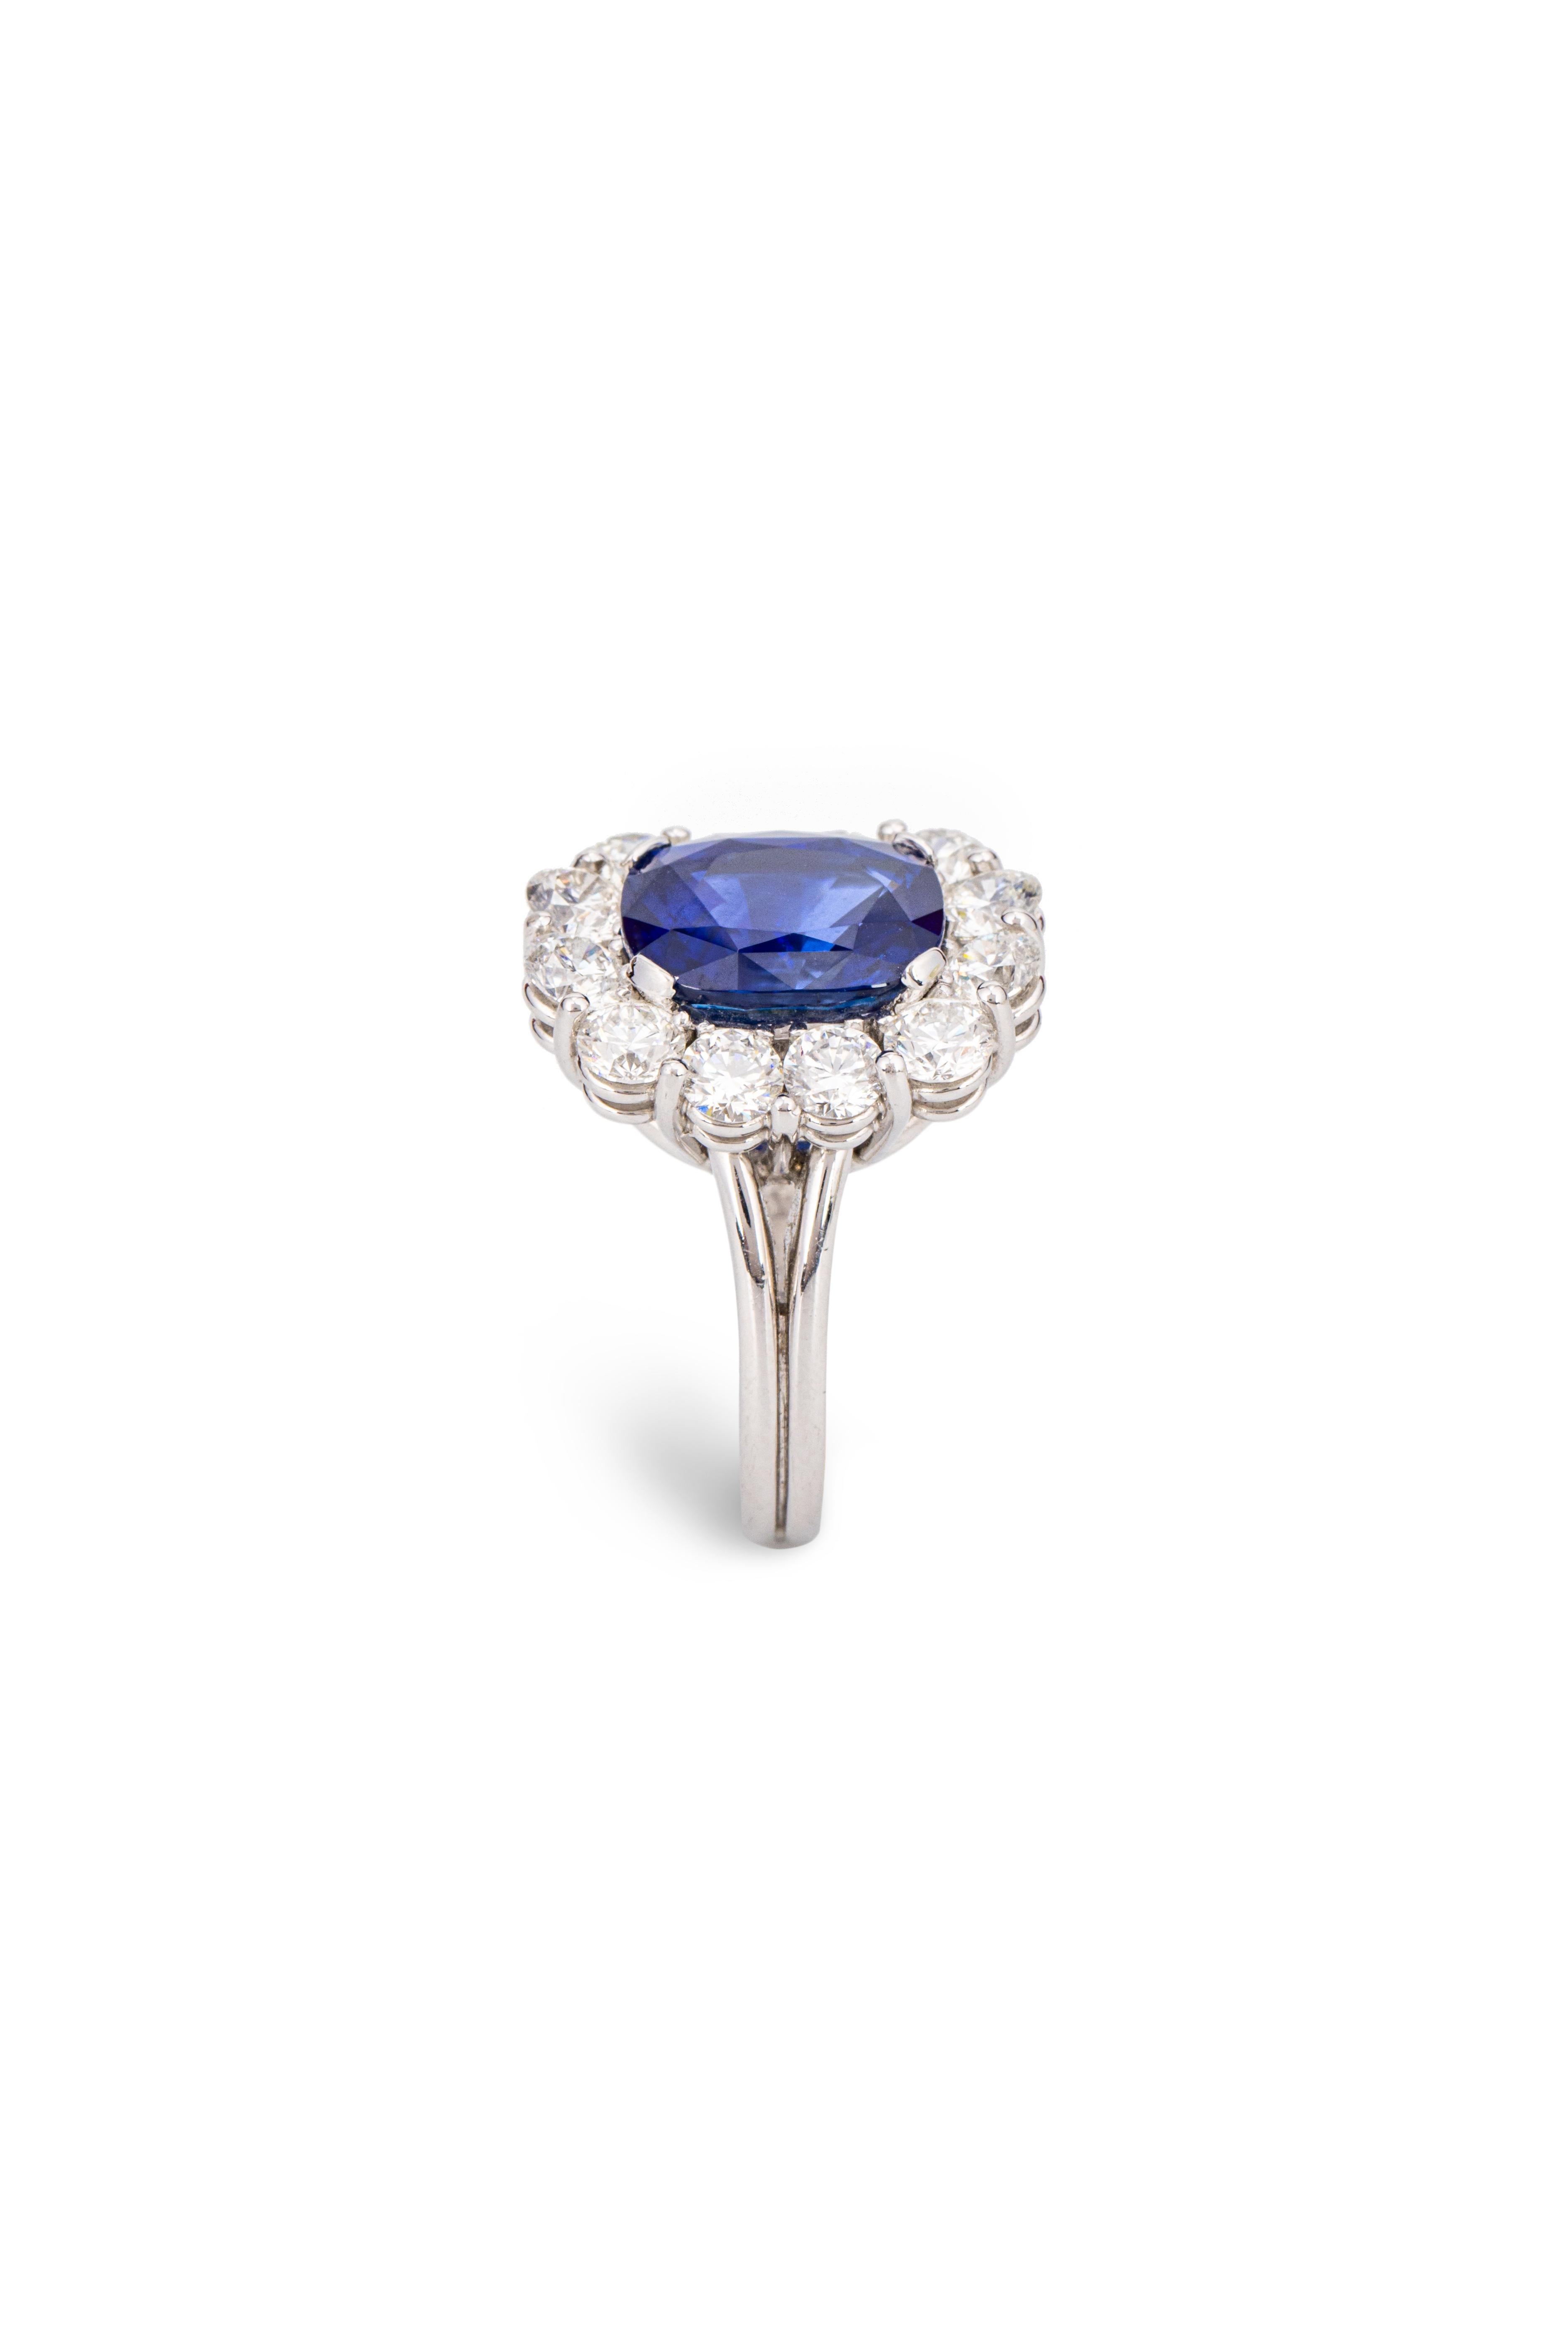 Blue Sapphire Ring - Cushion 4.35 Ct. - 18K White Gold #J5422